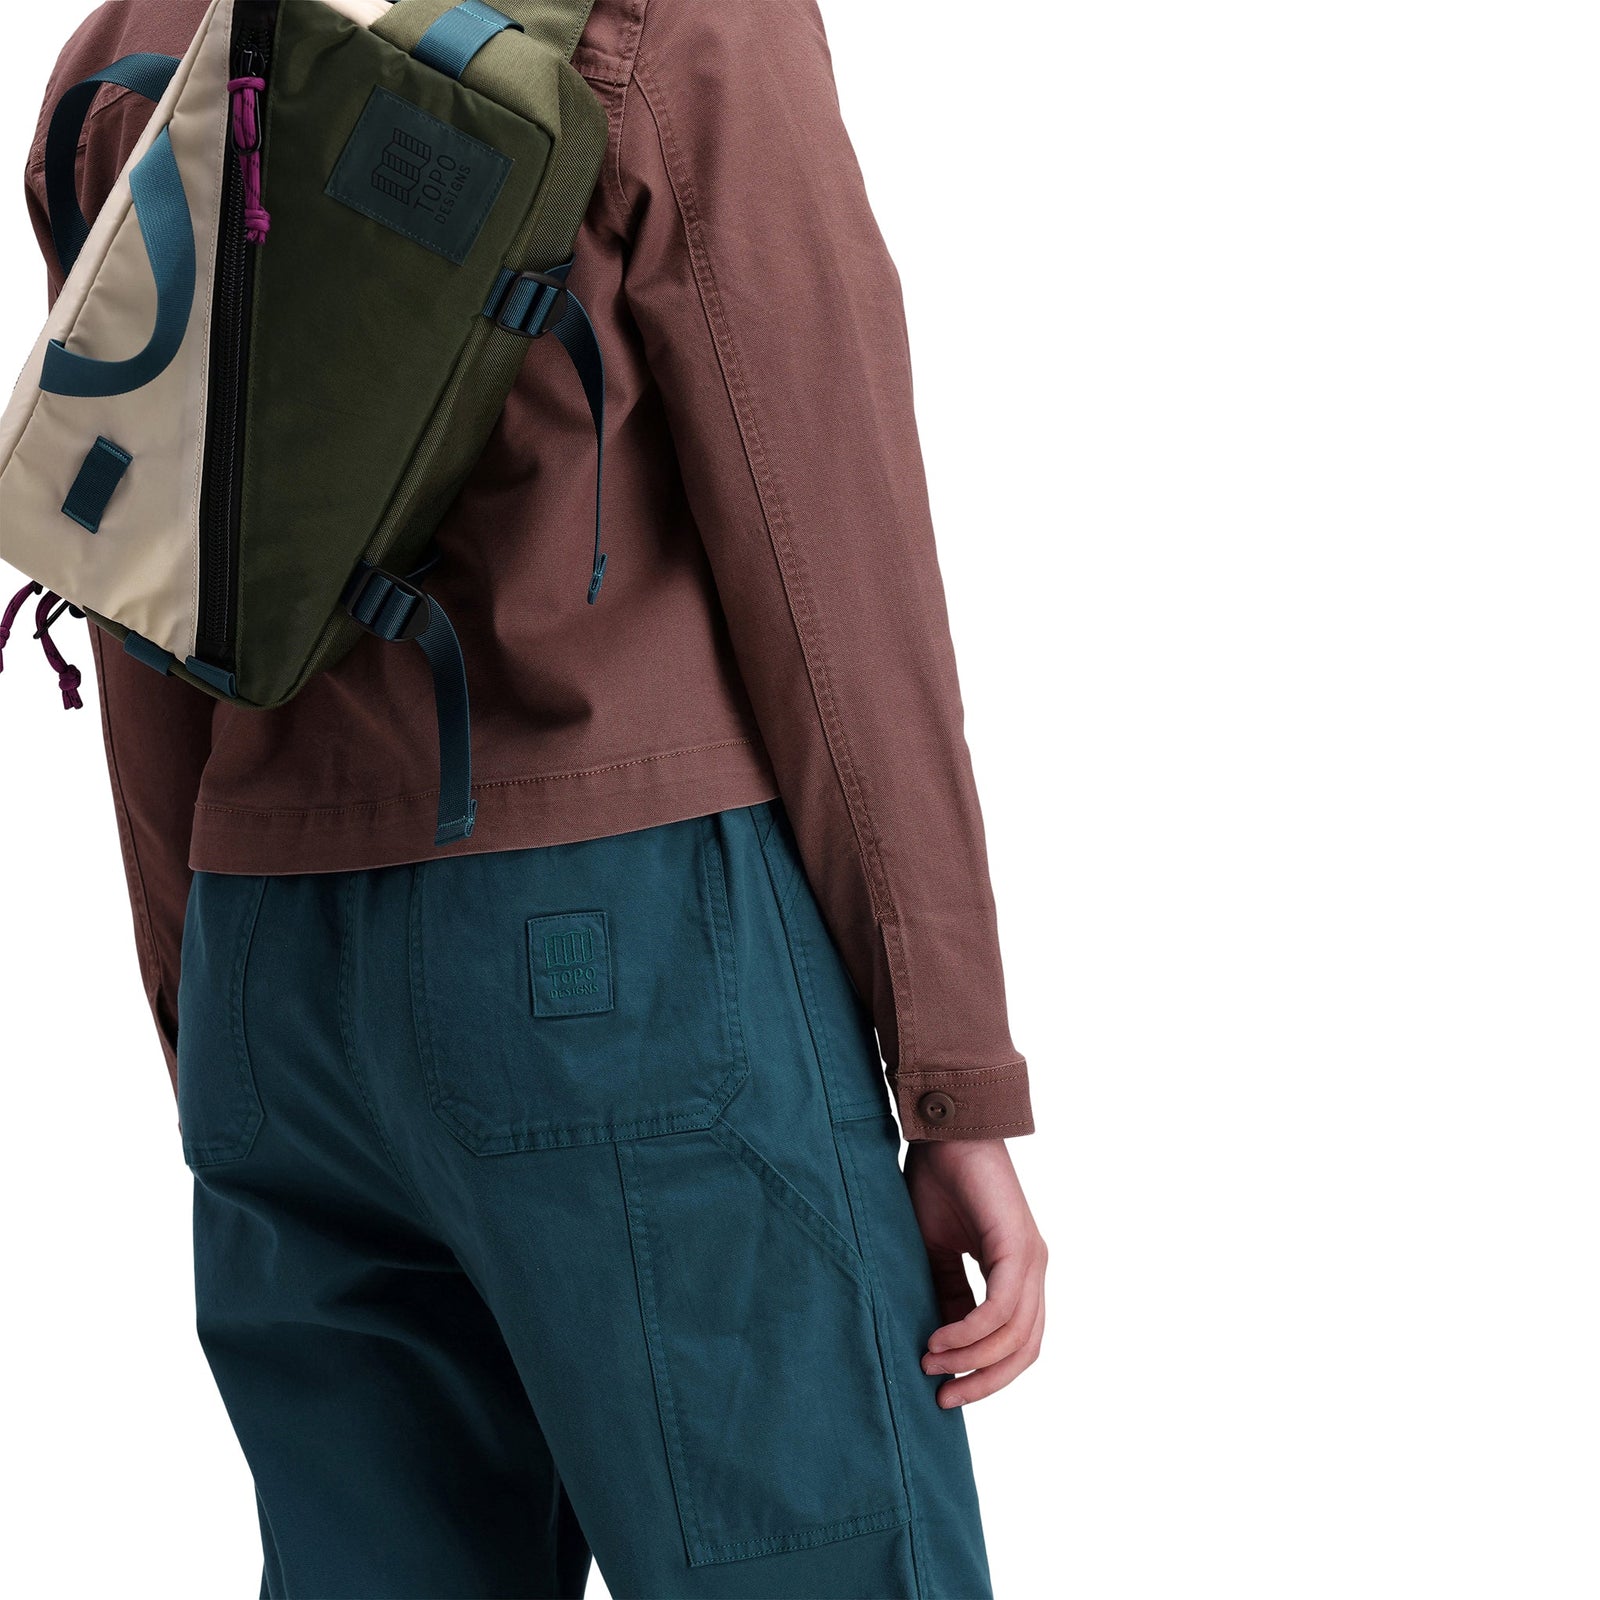 Back model shot of Topo Designs Women's Dirt Jacket 100% organic cotton shirt jacket in "peppercorn" brown purple